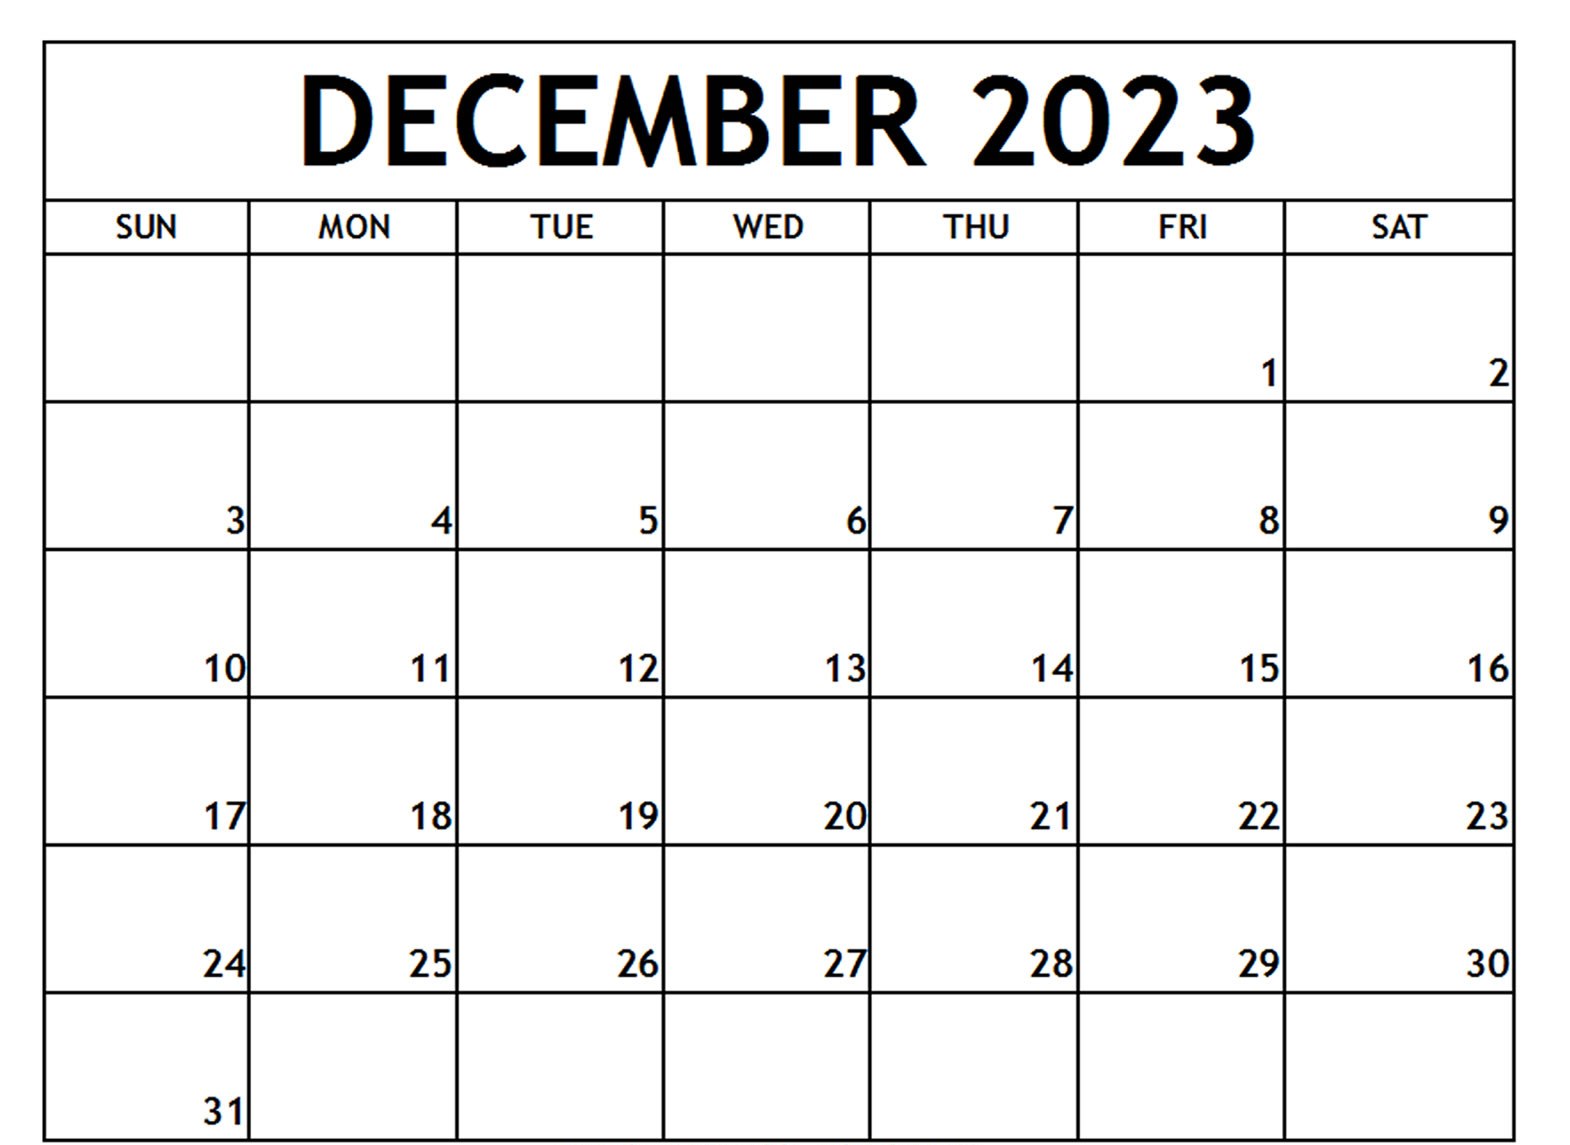 December 2023 Calendar Blank Templates